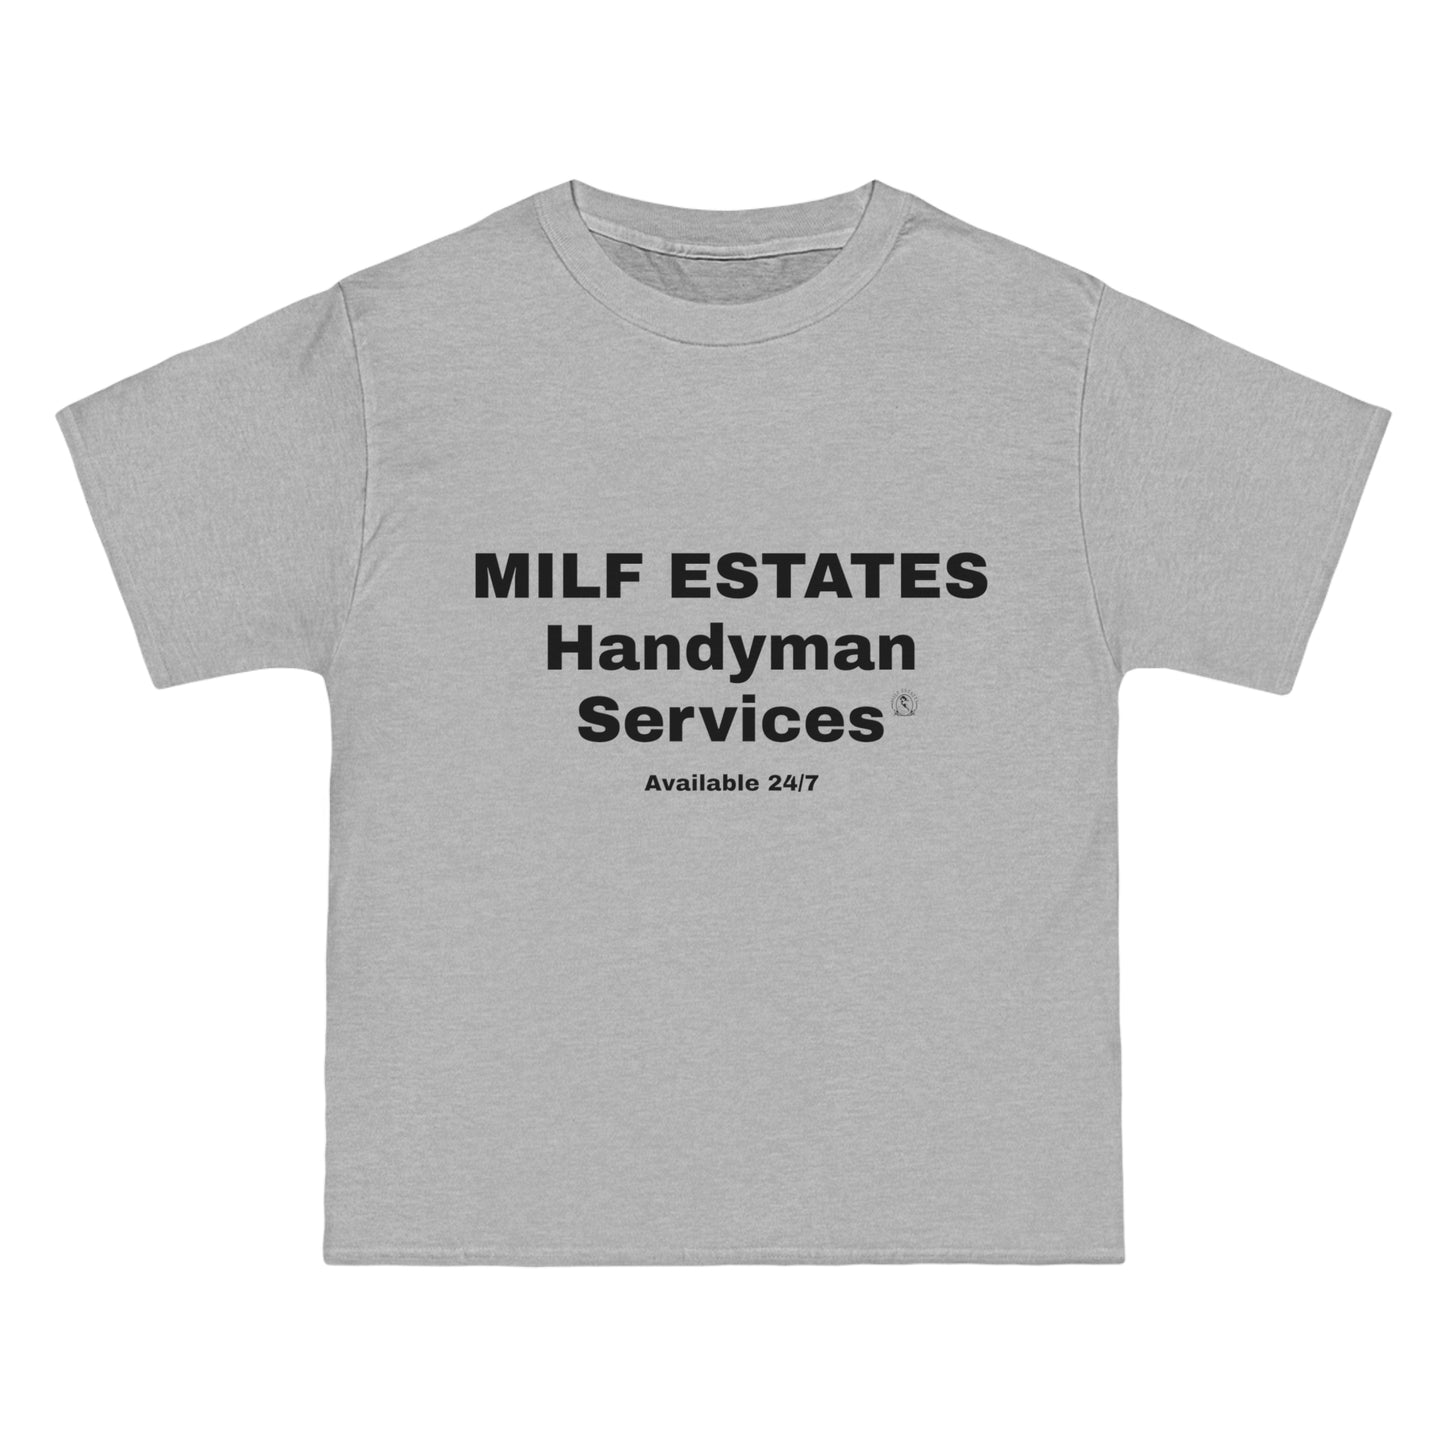 MILF ESTATES Handyman Services  "Available 24/7'